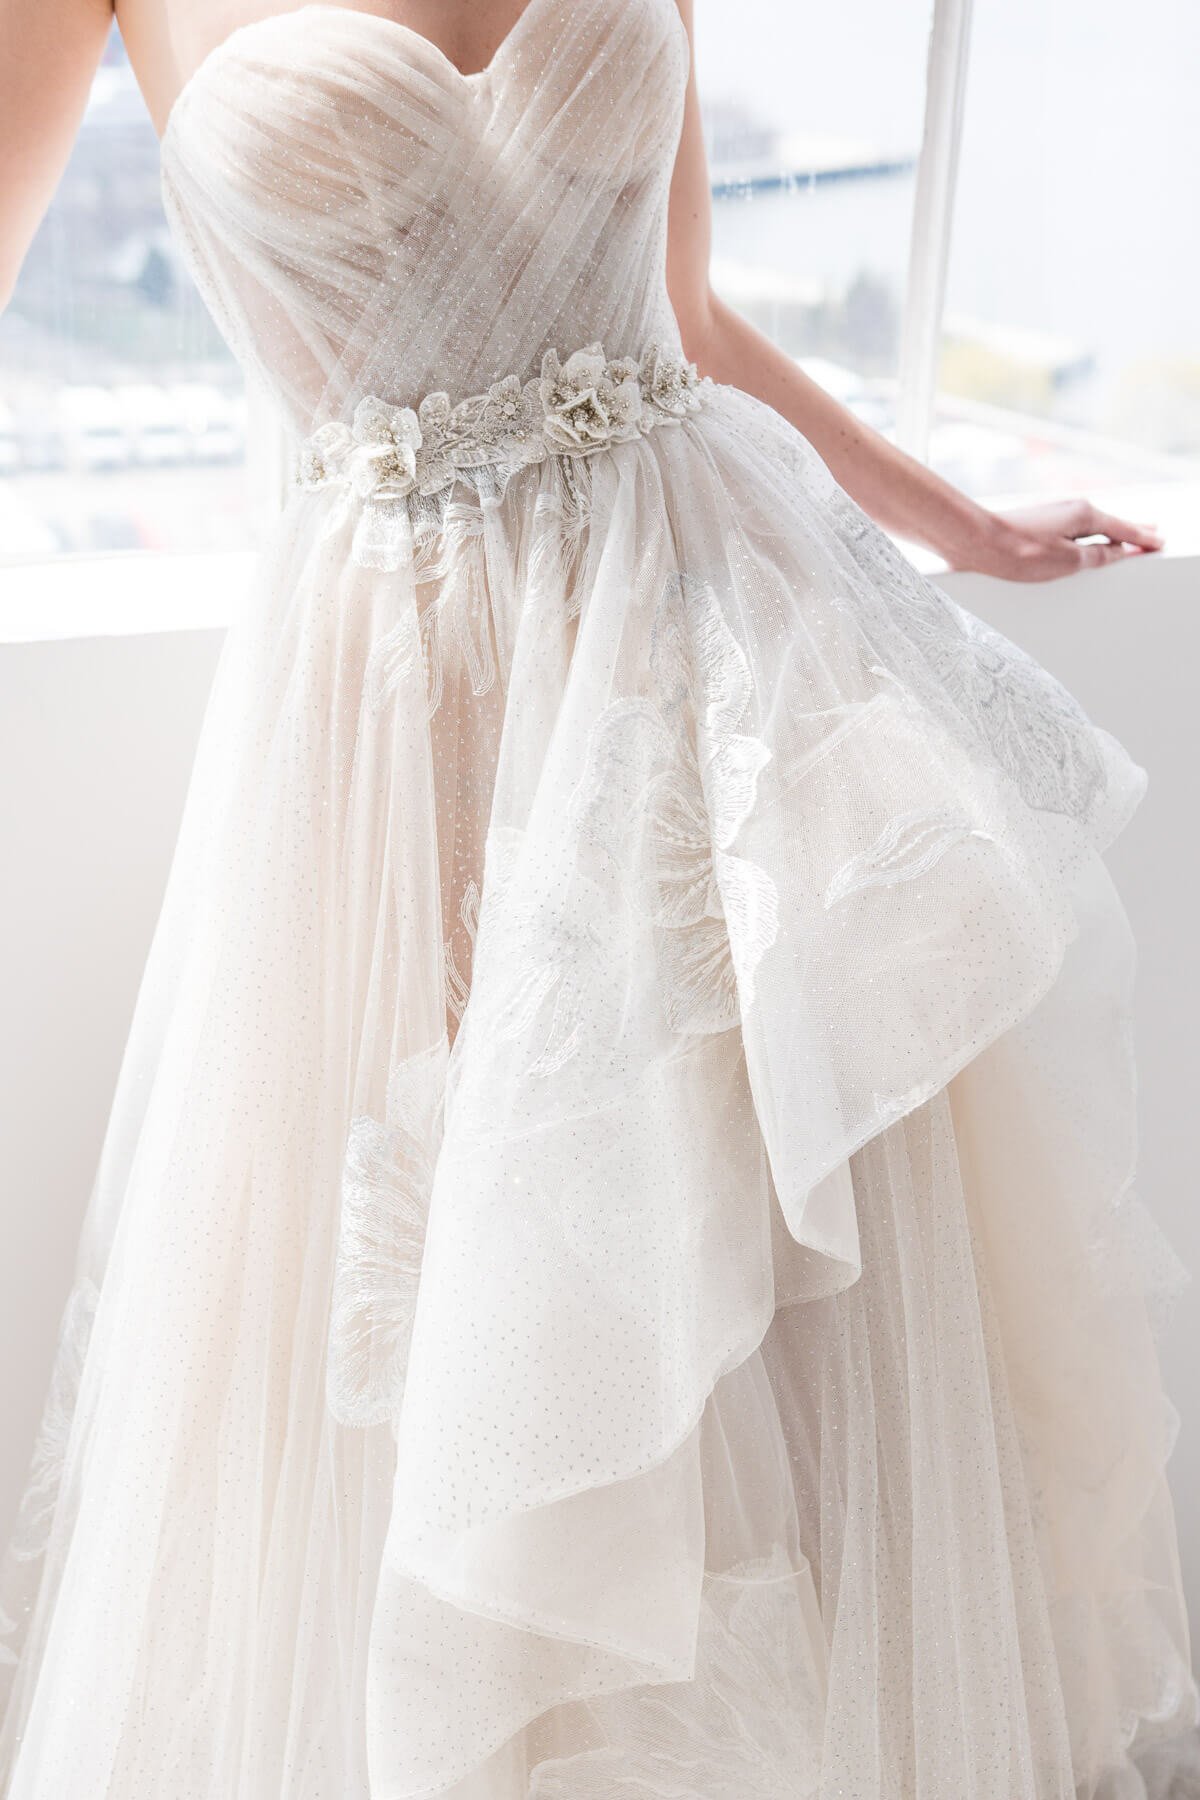 Morgan Newsom Galia Lahav wedding dress designer New York photographer-0839.jpg